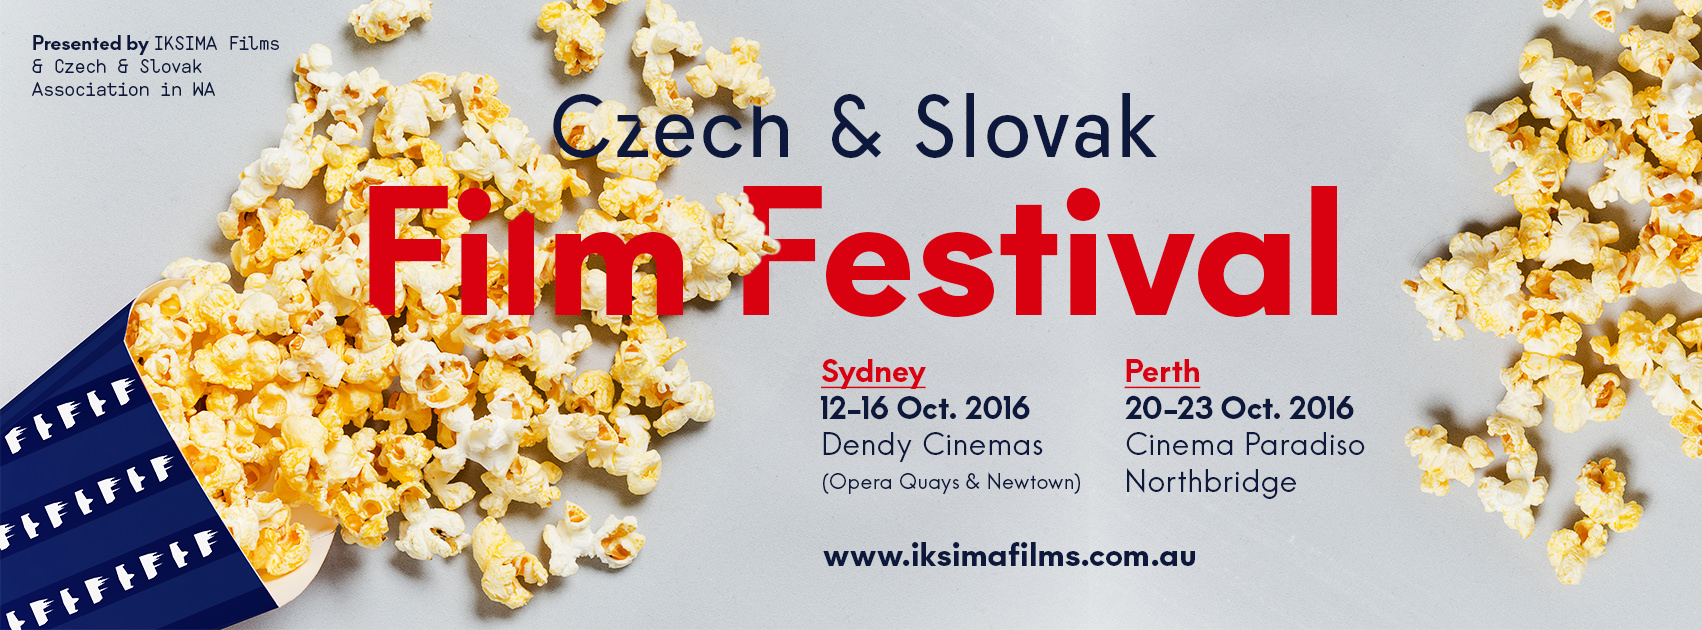 Czech & Slovak Film Festival Perth 2016